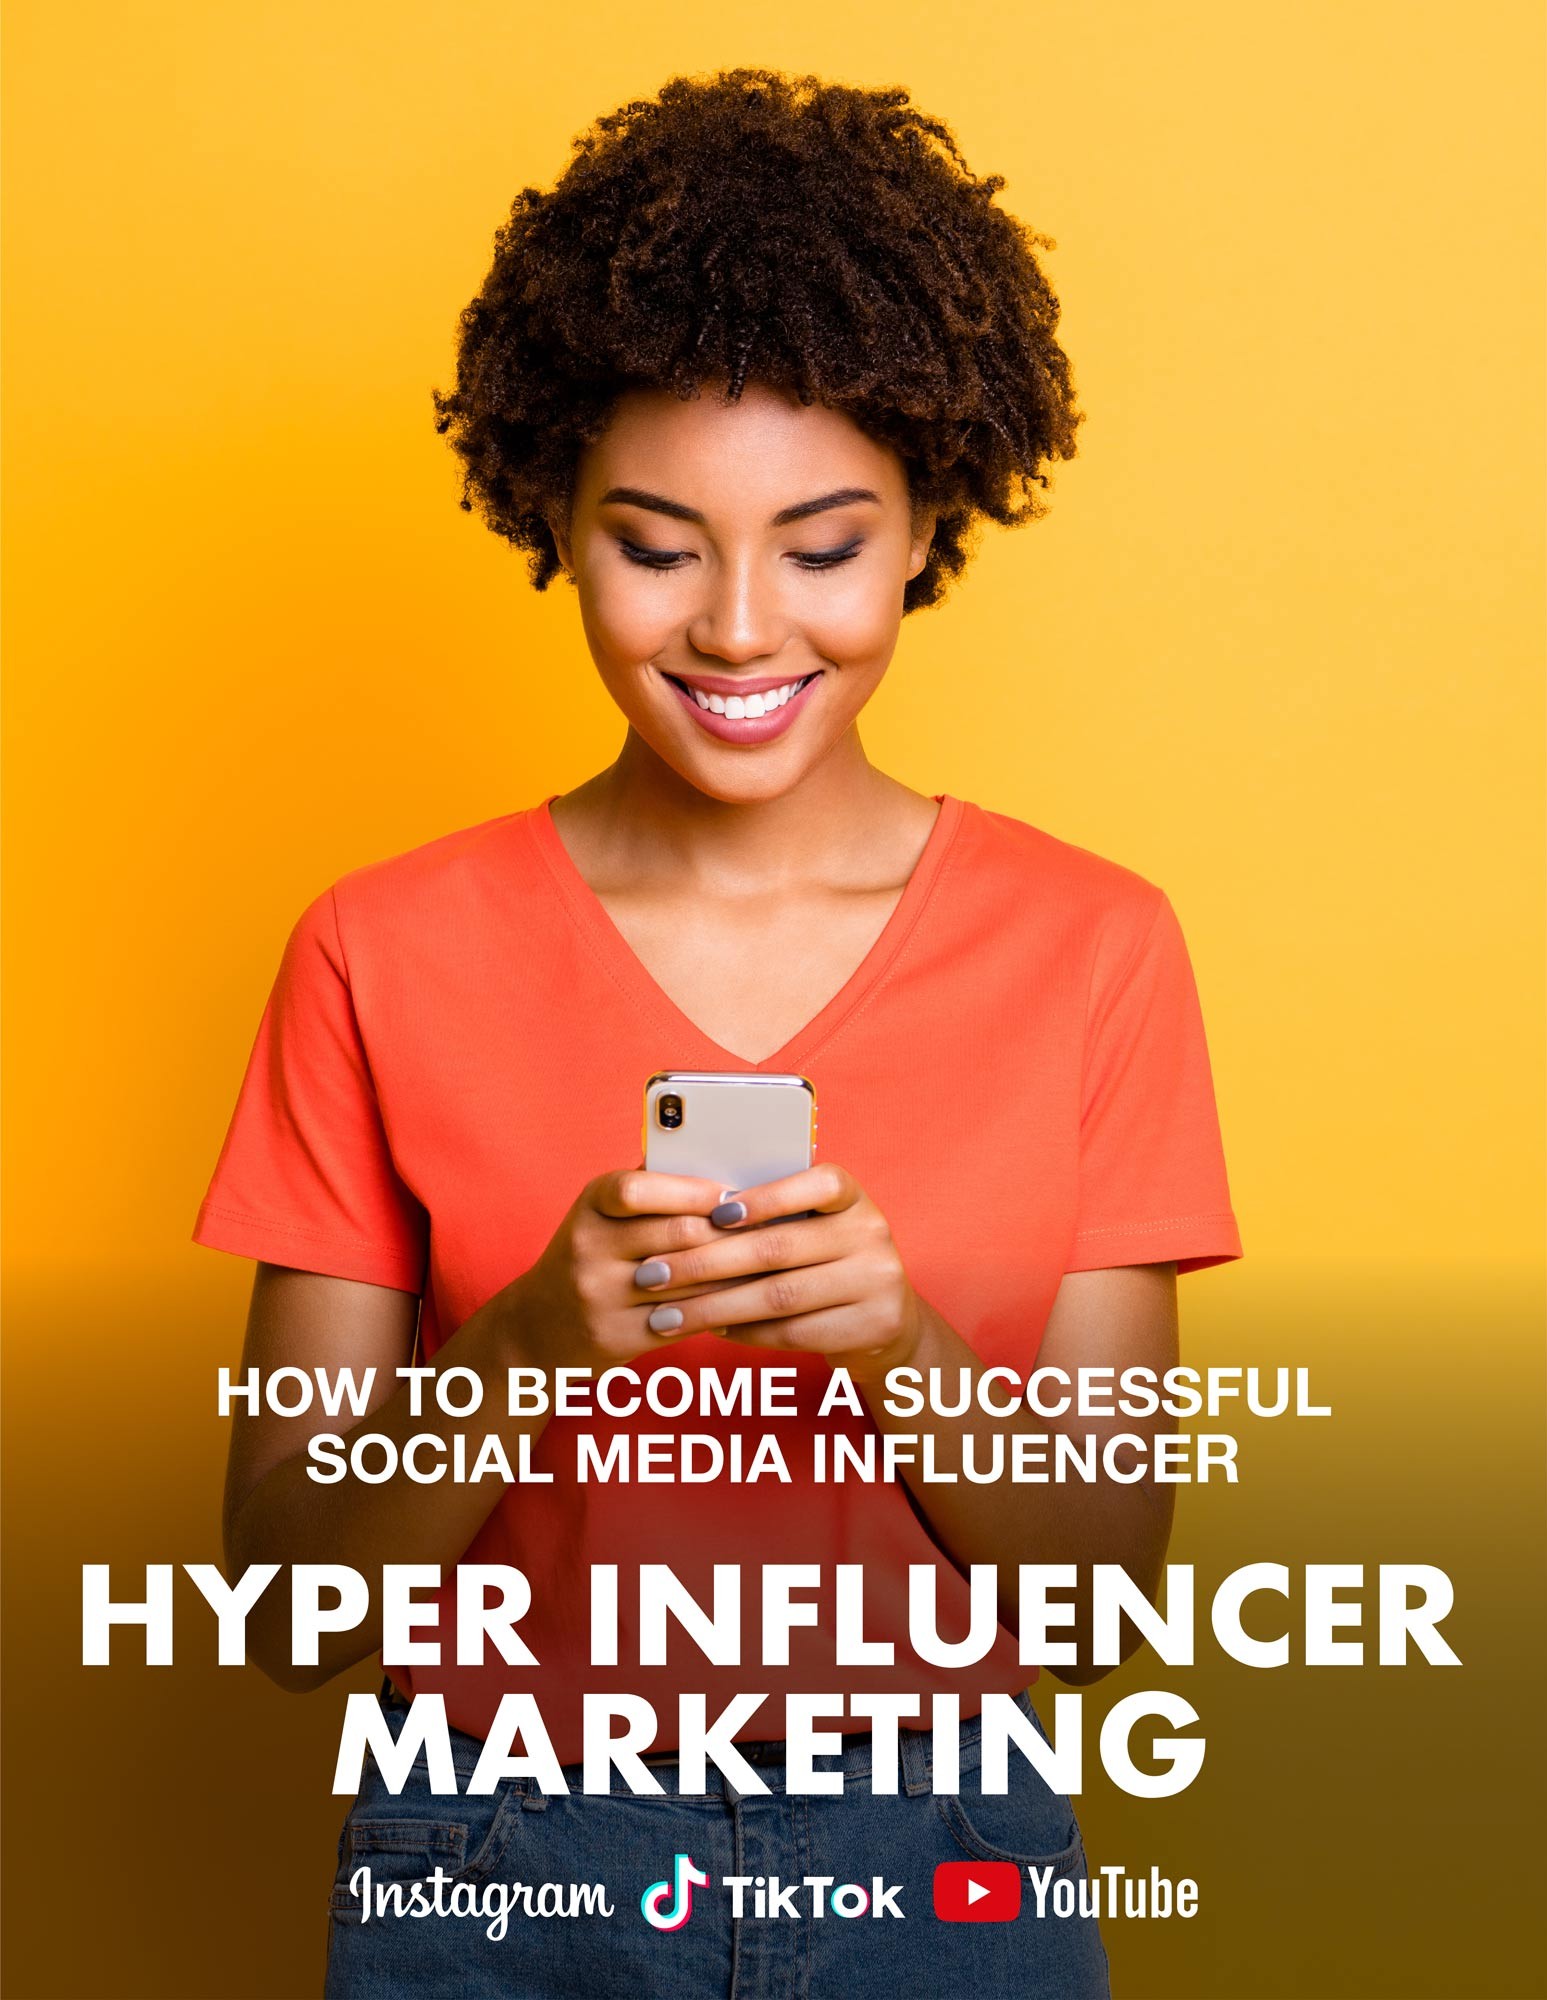 Hyper Influencer Marketing – How to Become a Powerful Social Media Influencer